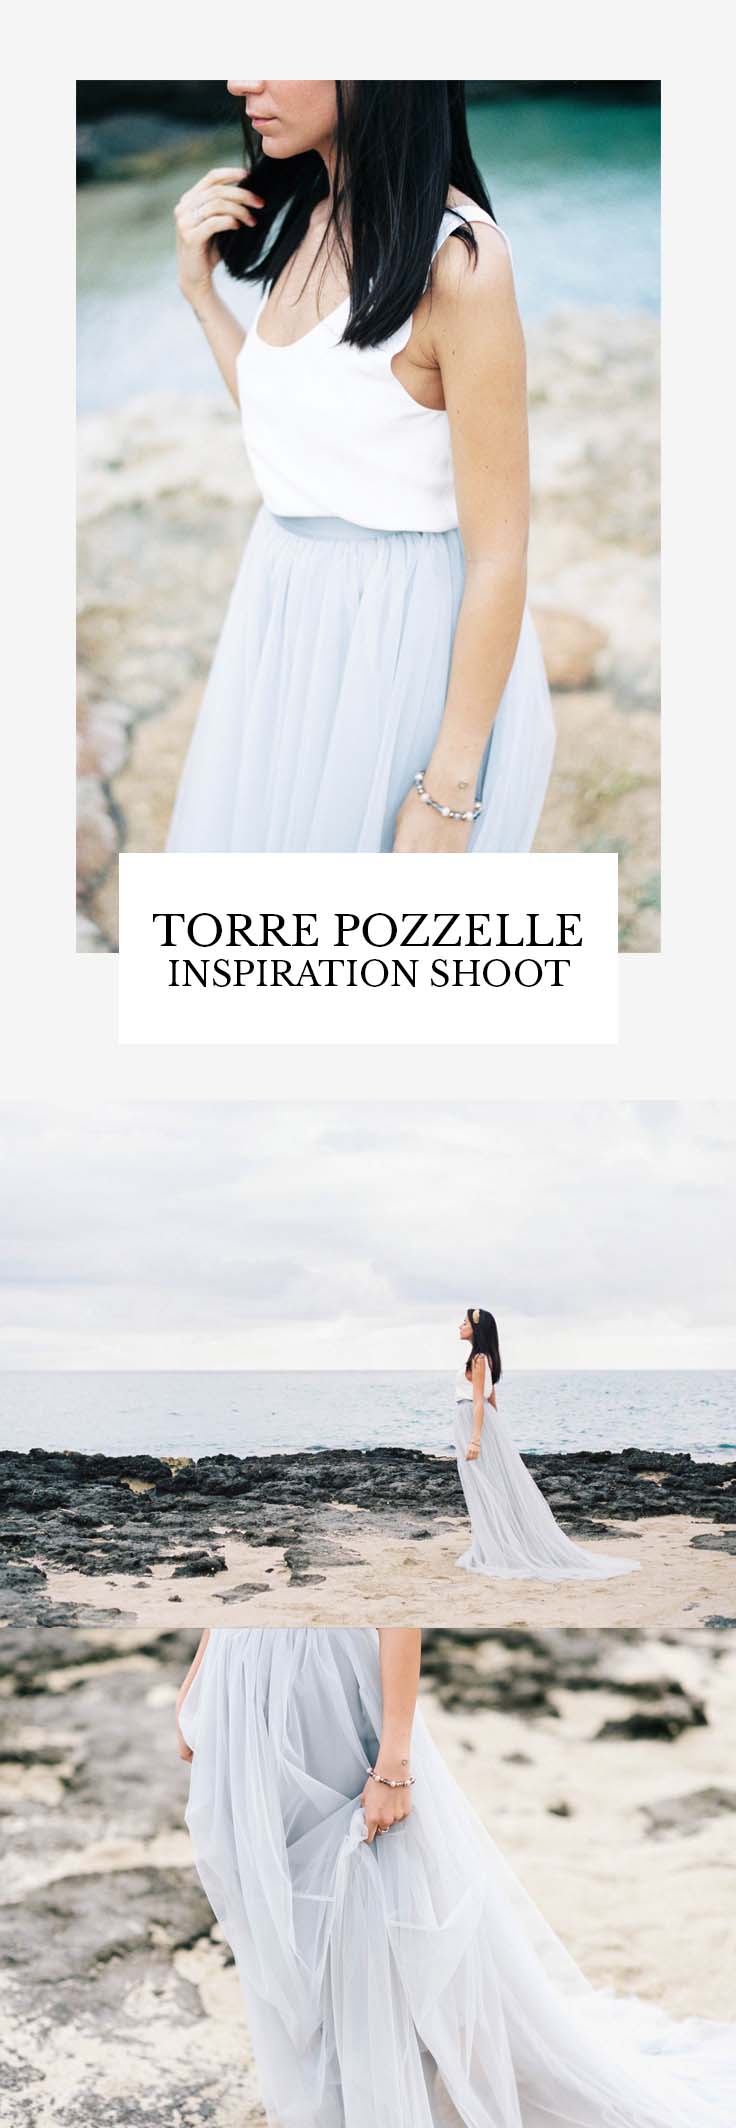 TORRE POZZELLE INSPIRATION SHOOT